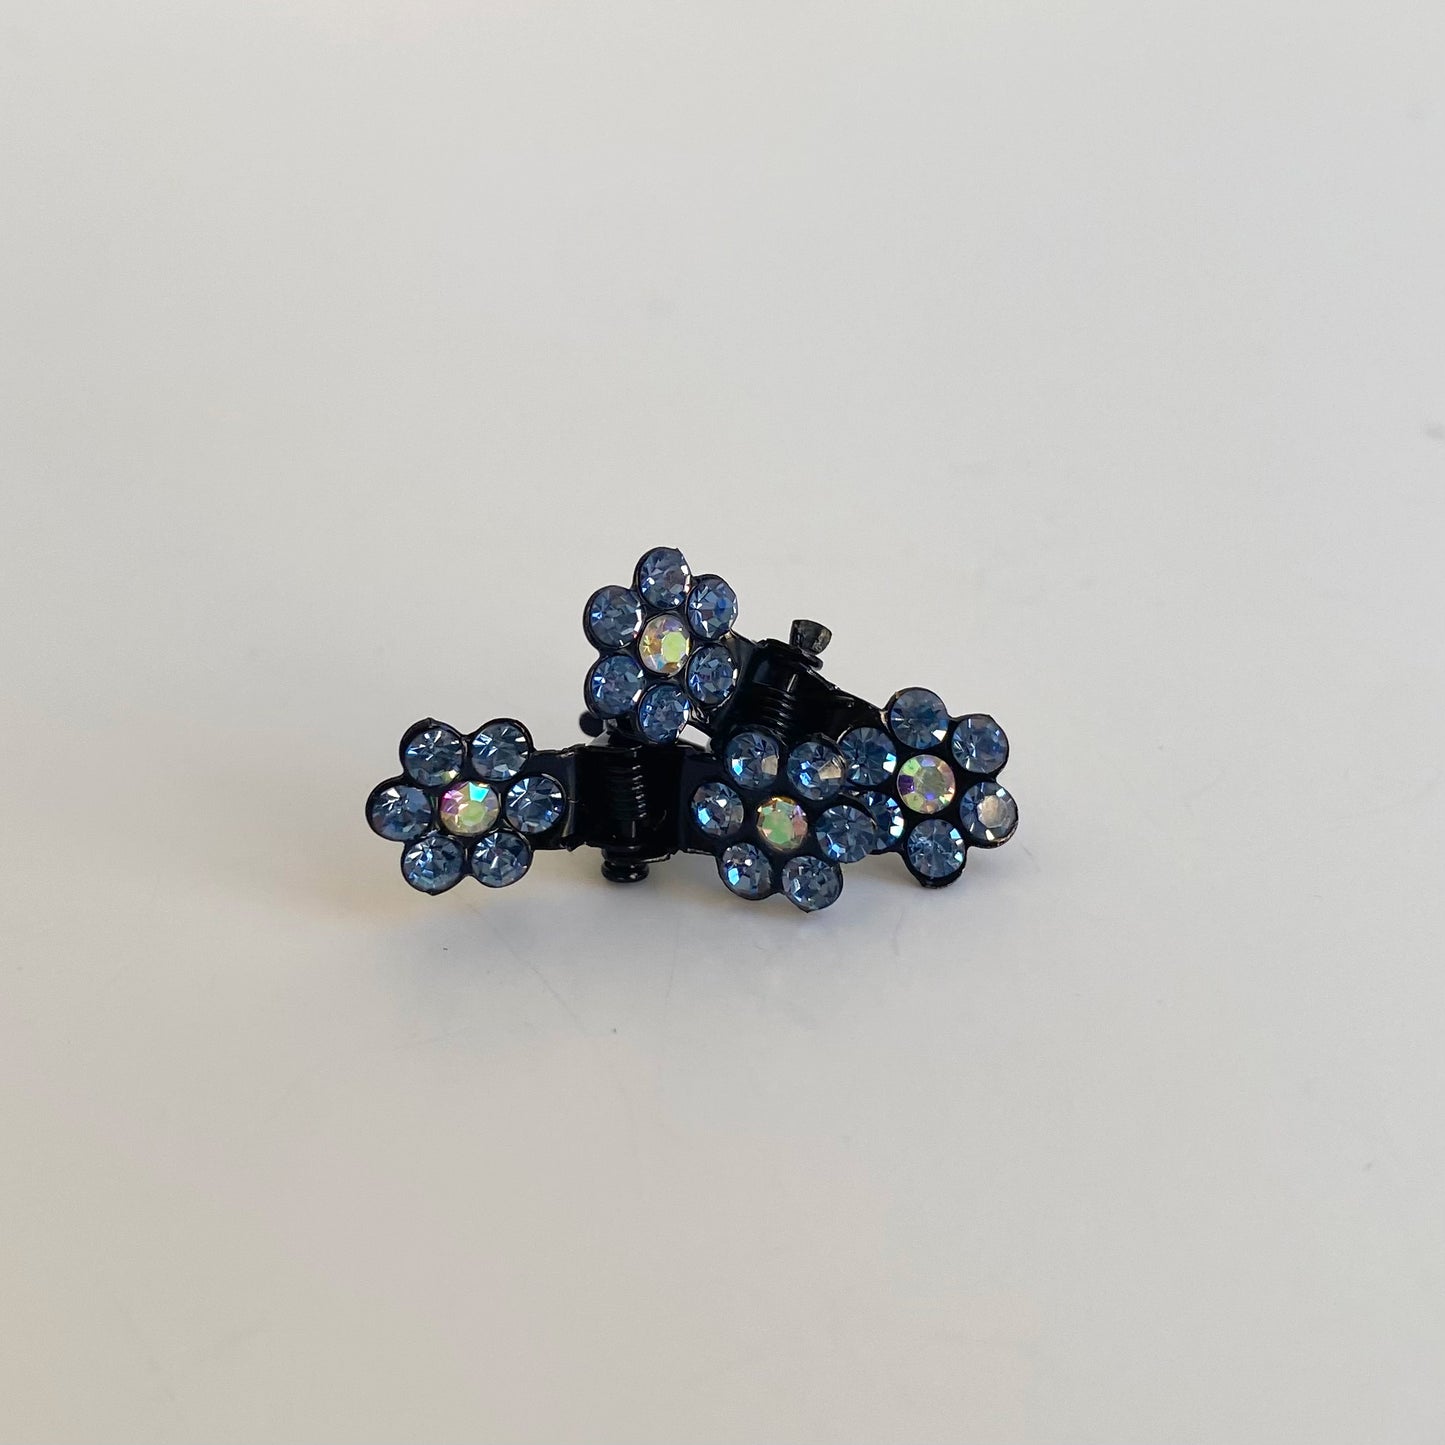 Small Rhinestone Flower Hair Clips in blue 